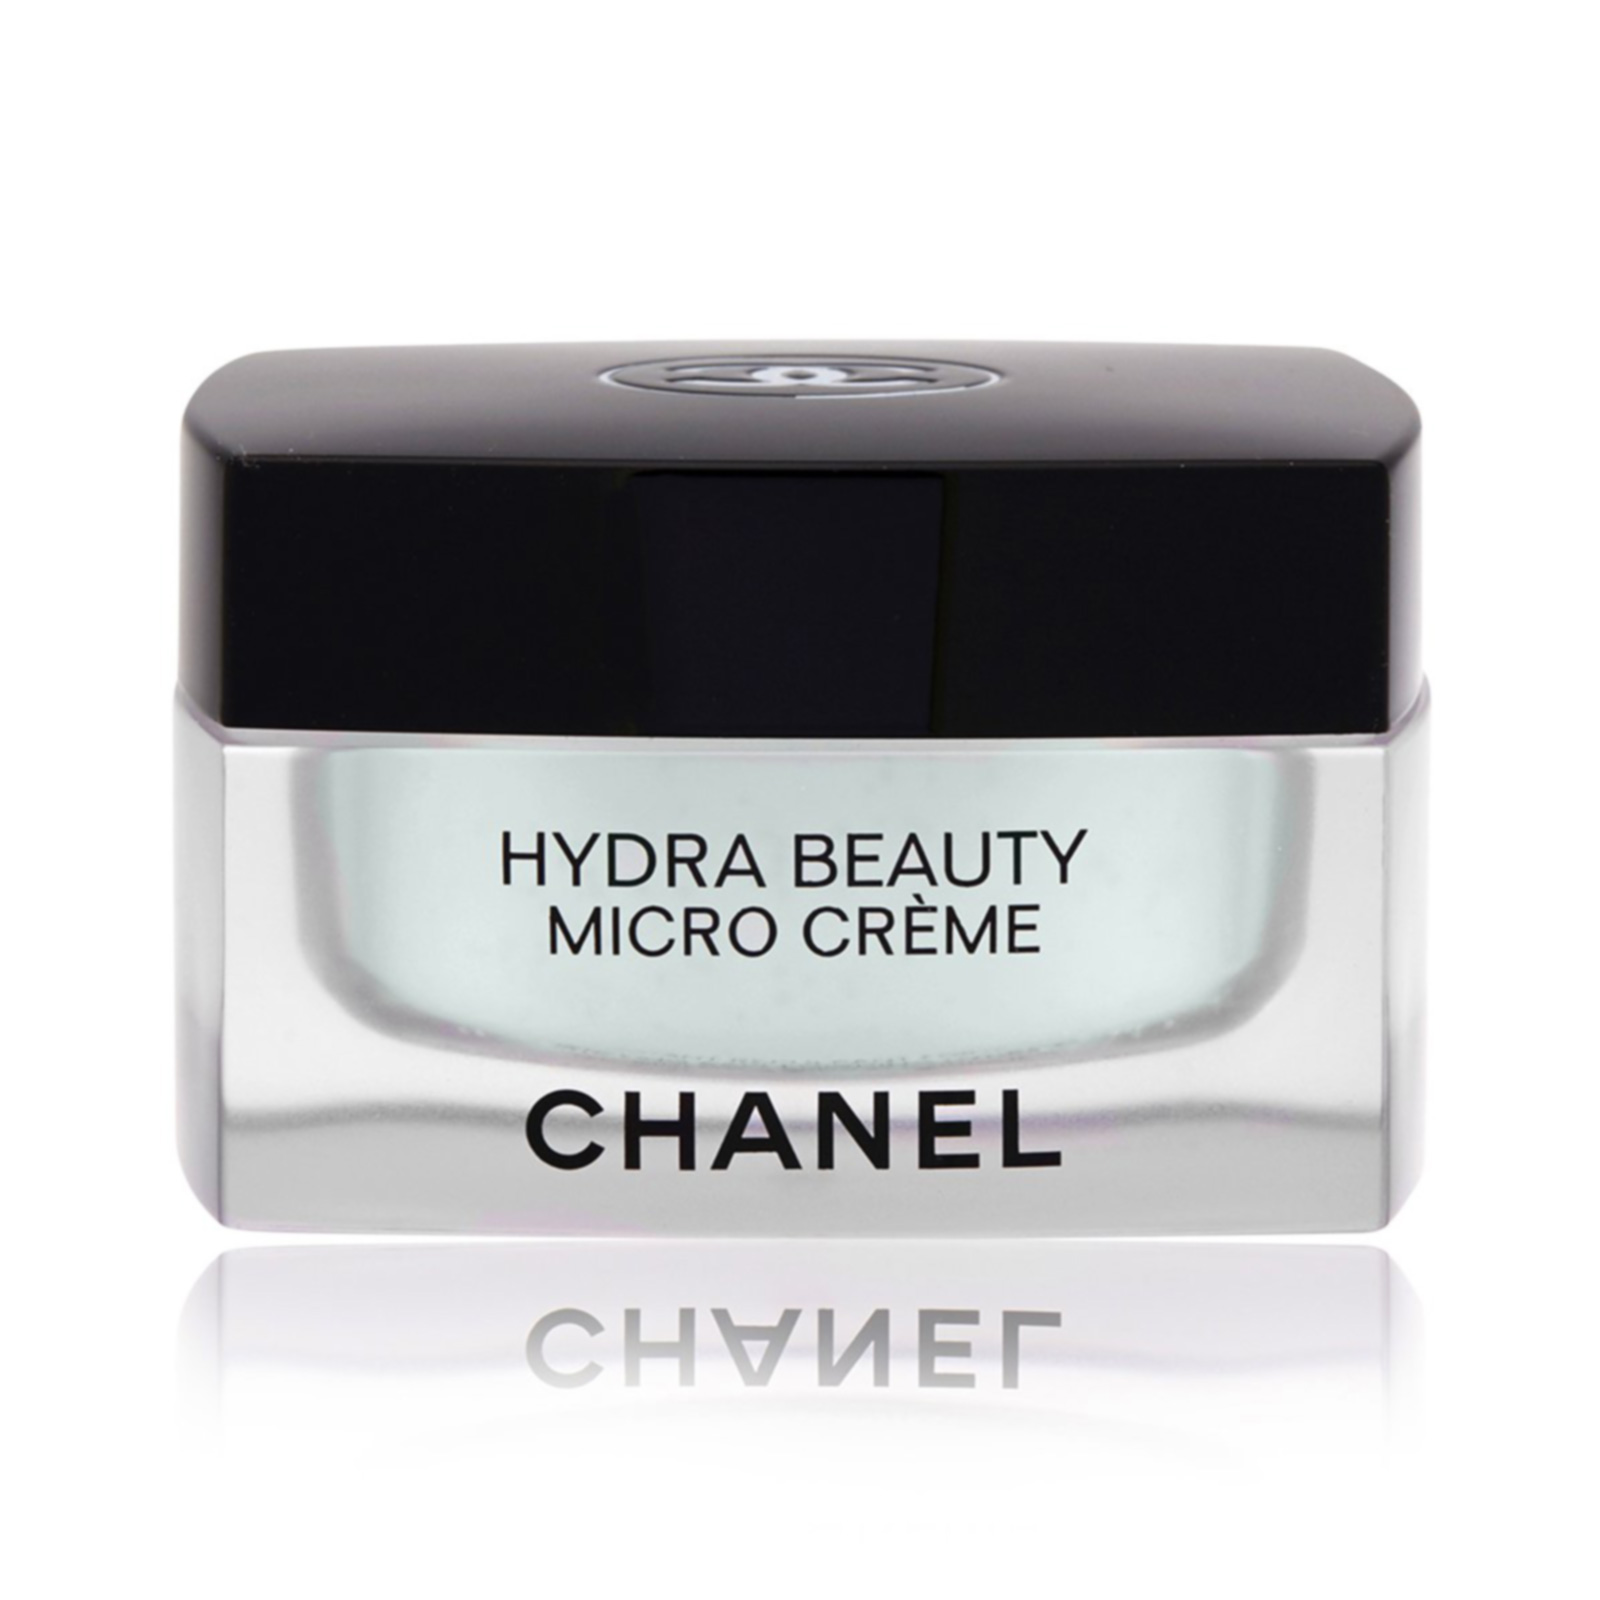 CHANEL HYDRA BEAUTY MICRO CRÈME YEUX Illuminating Hydrating Eye Cream